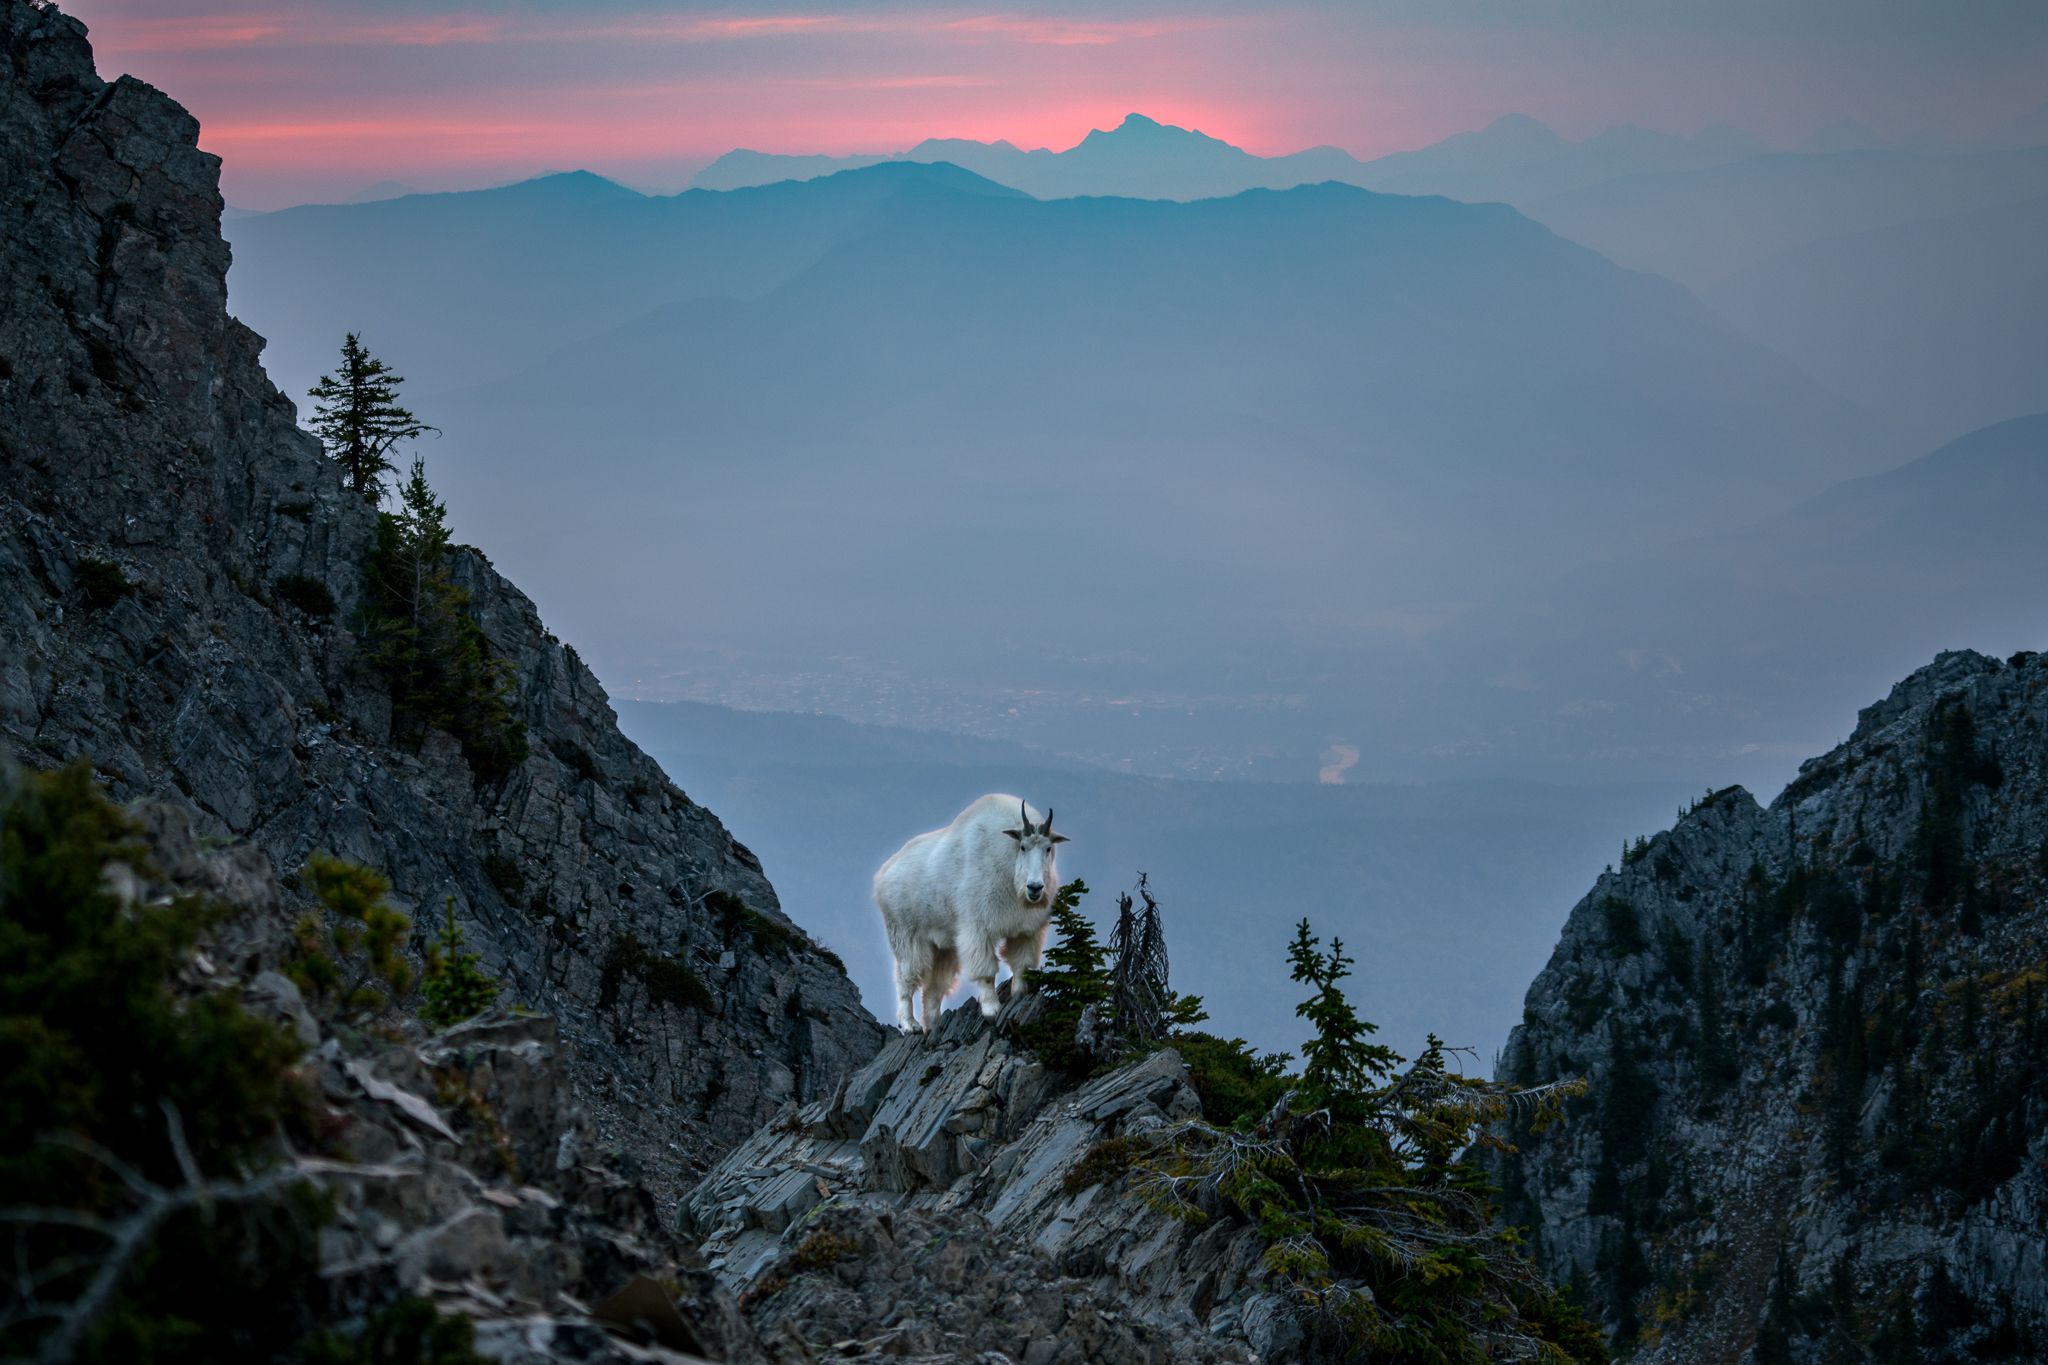 Mountain goats of Fernie, BC